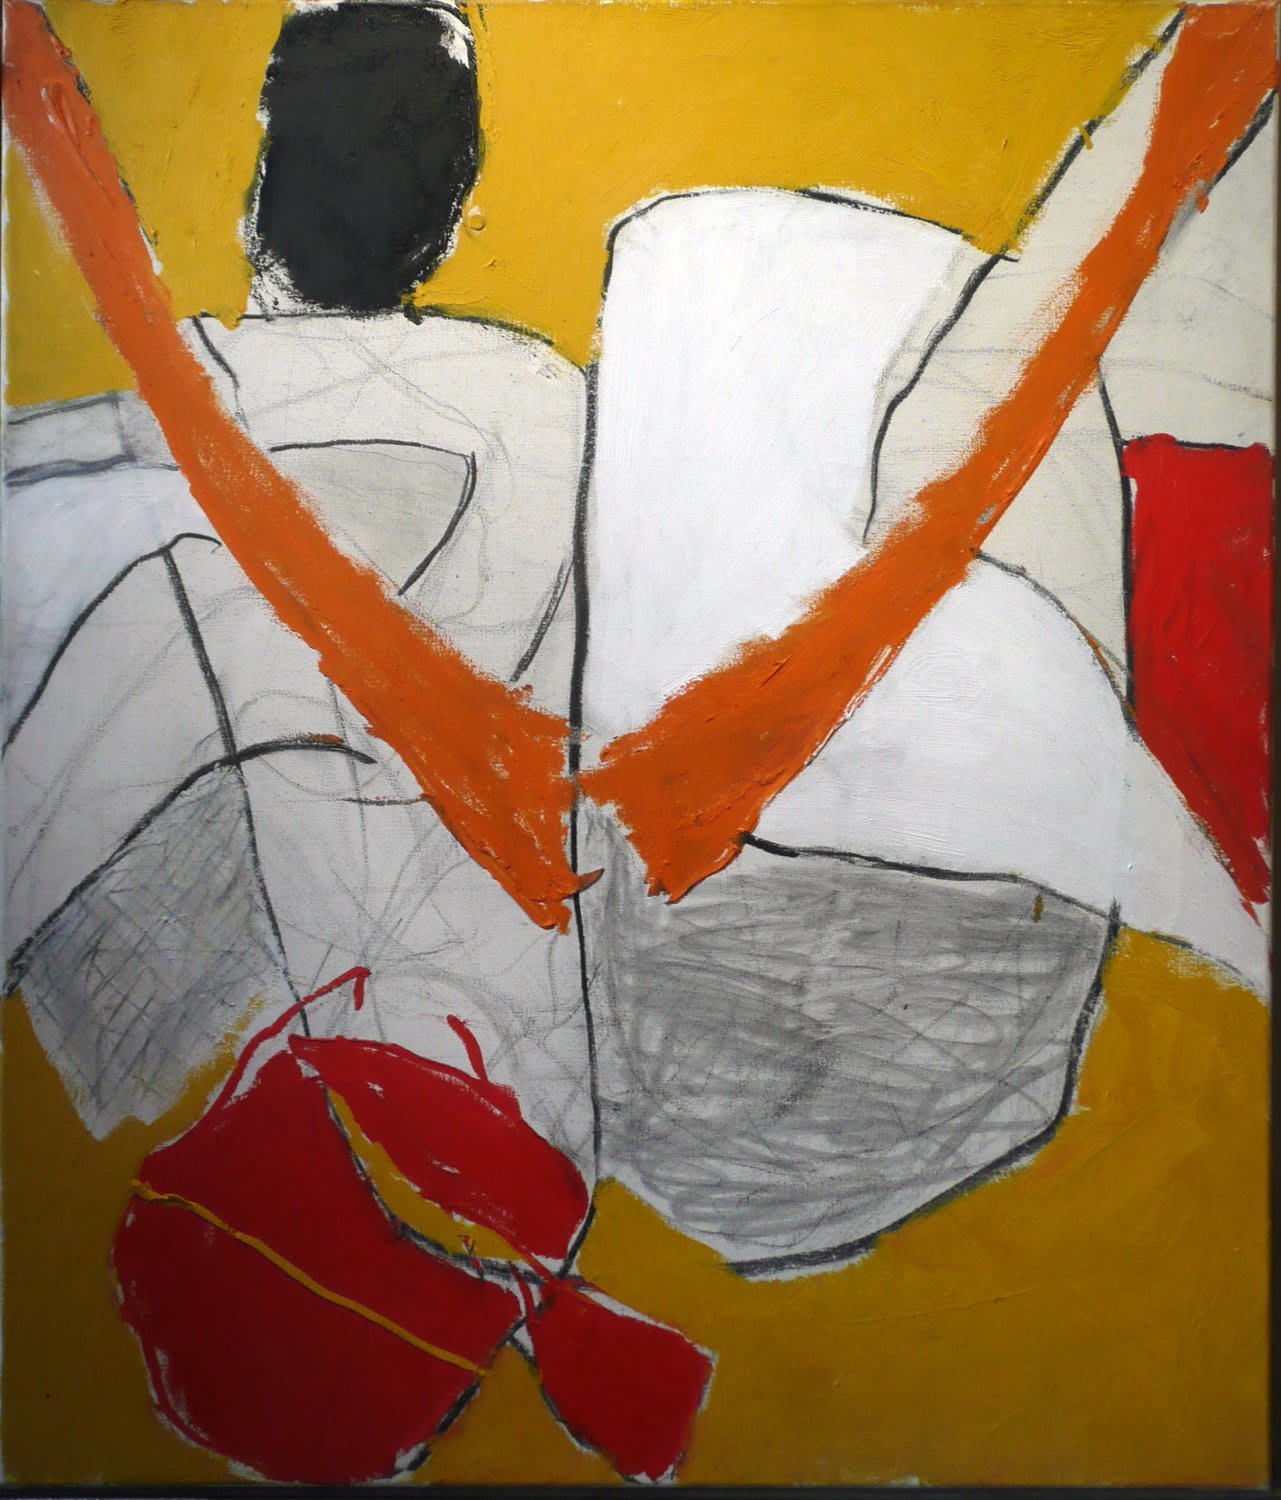 Roger Hilton, Painting (Nude), c.1962